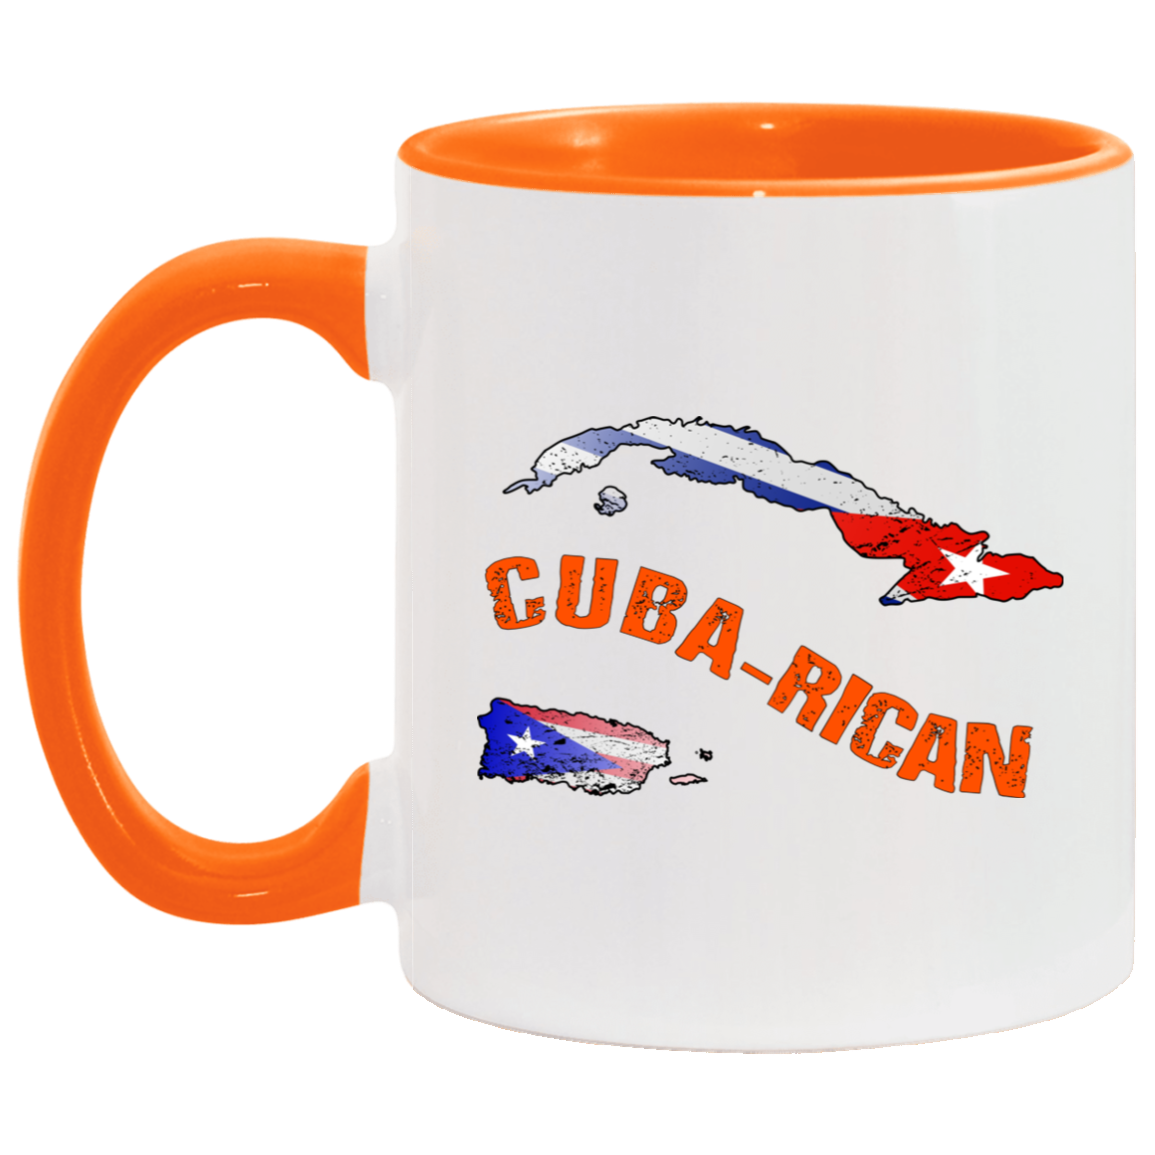 Cuba-Rican Islands 11OZ Accent Mug - Puerto Rican Pride